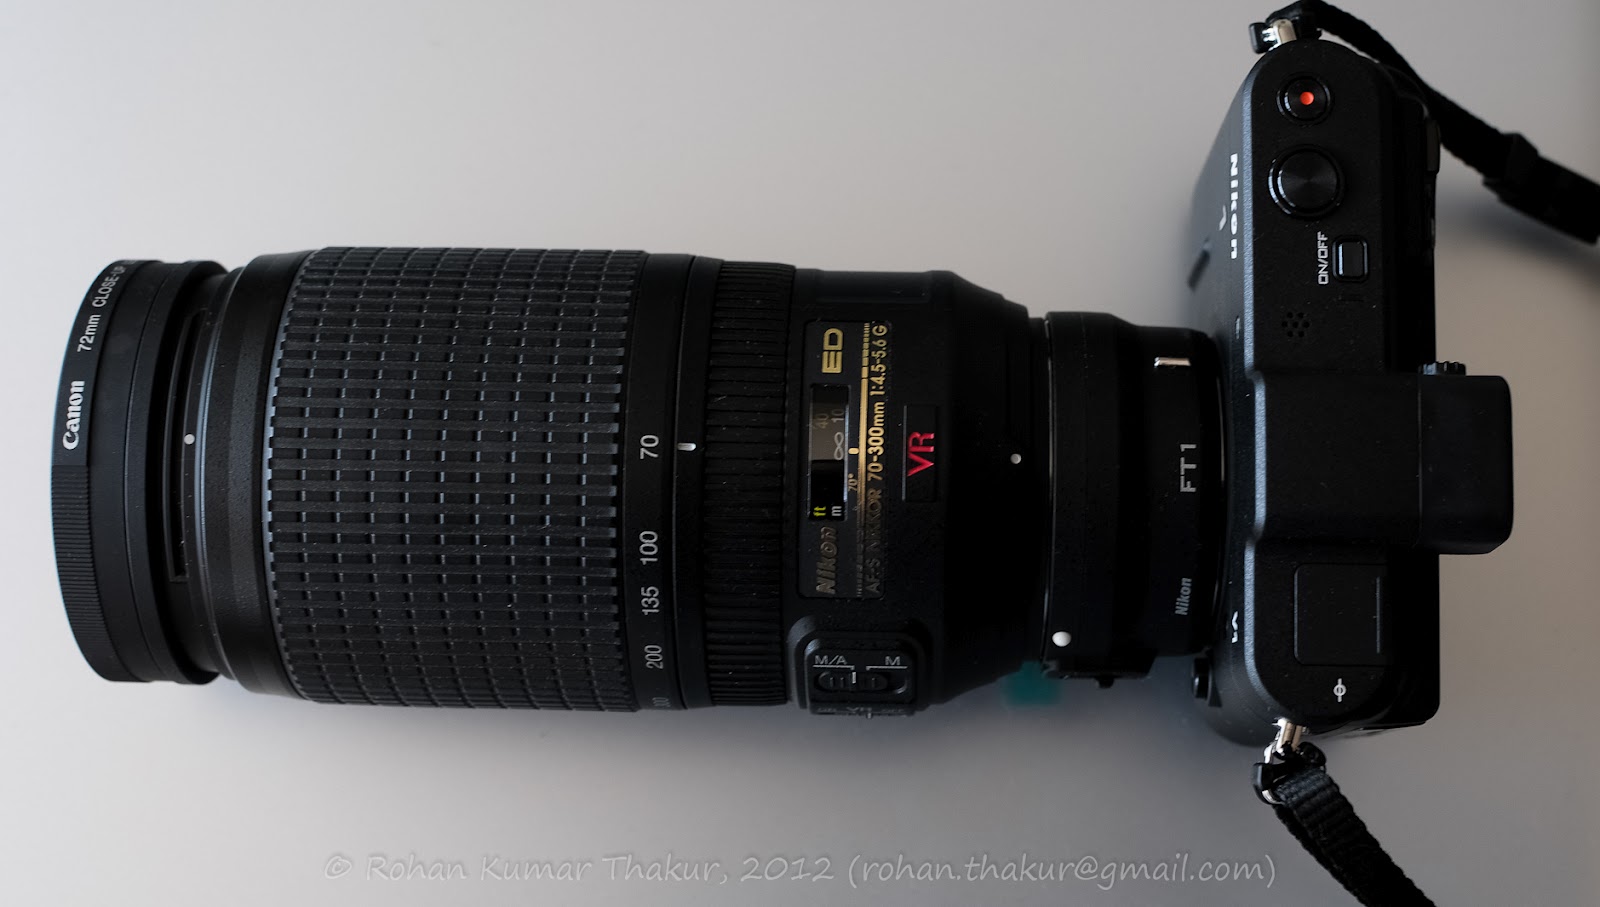 Rohan Thakur's Photo Blog: Gear: Nikon 1 V1 + FT1 + Nikon 70-300VR